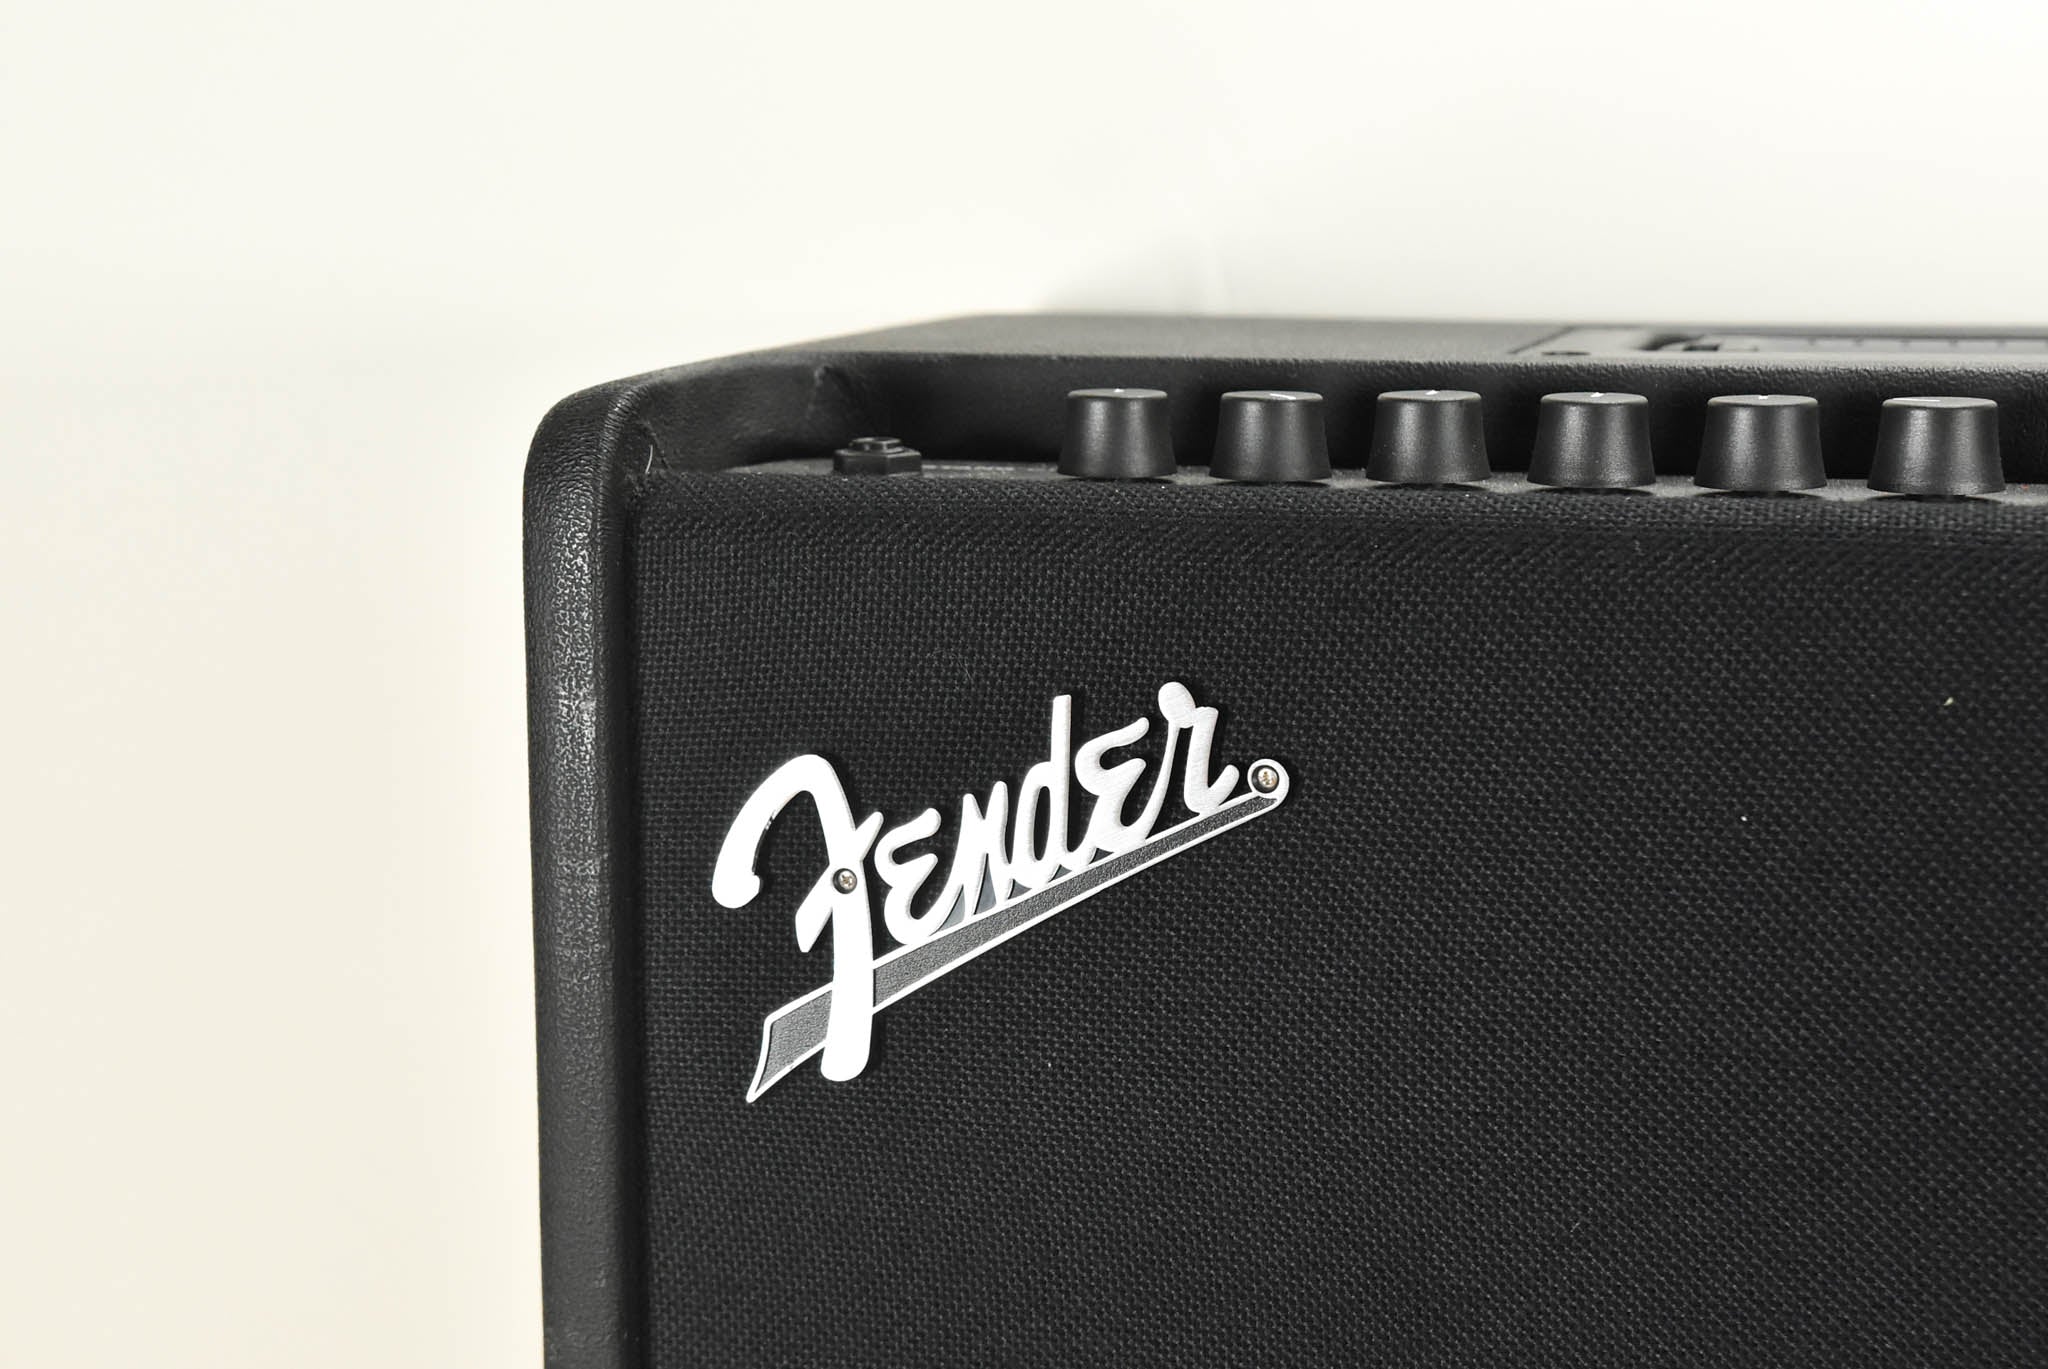 Fender Mustang GT100 100W 1x12" Modeling Guitar Amplifier